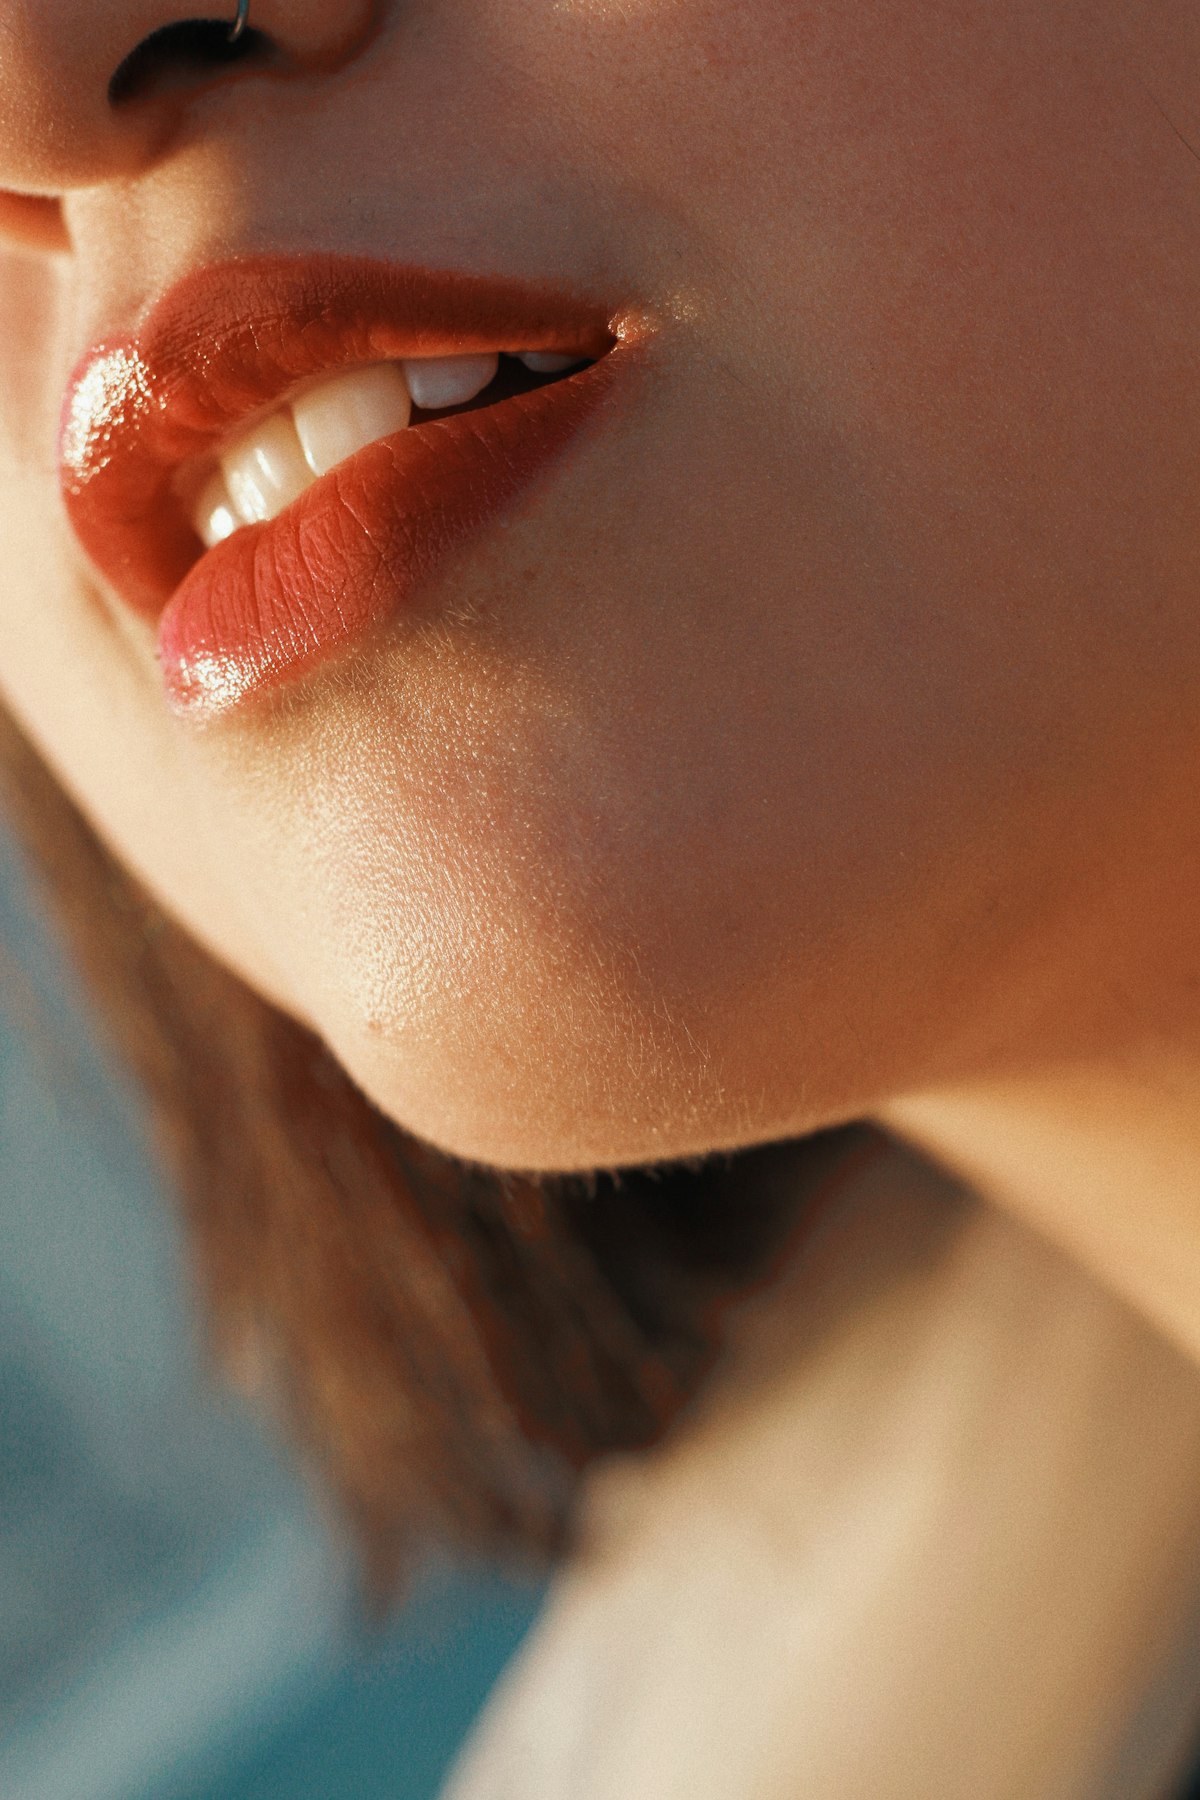 How to massage lip filler lumps